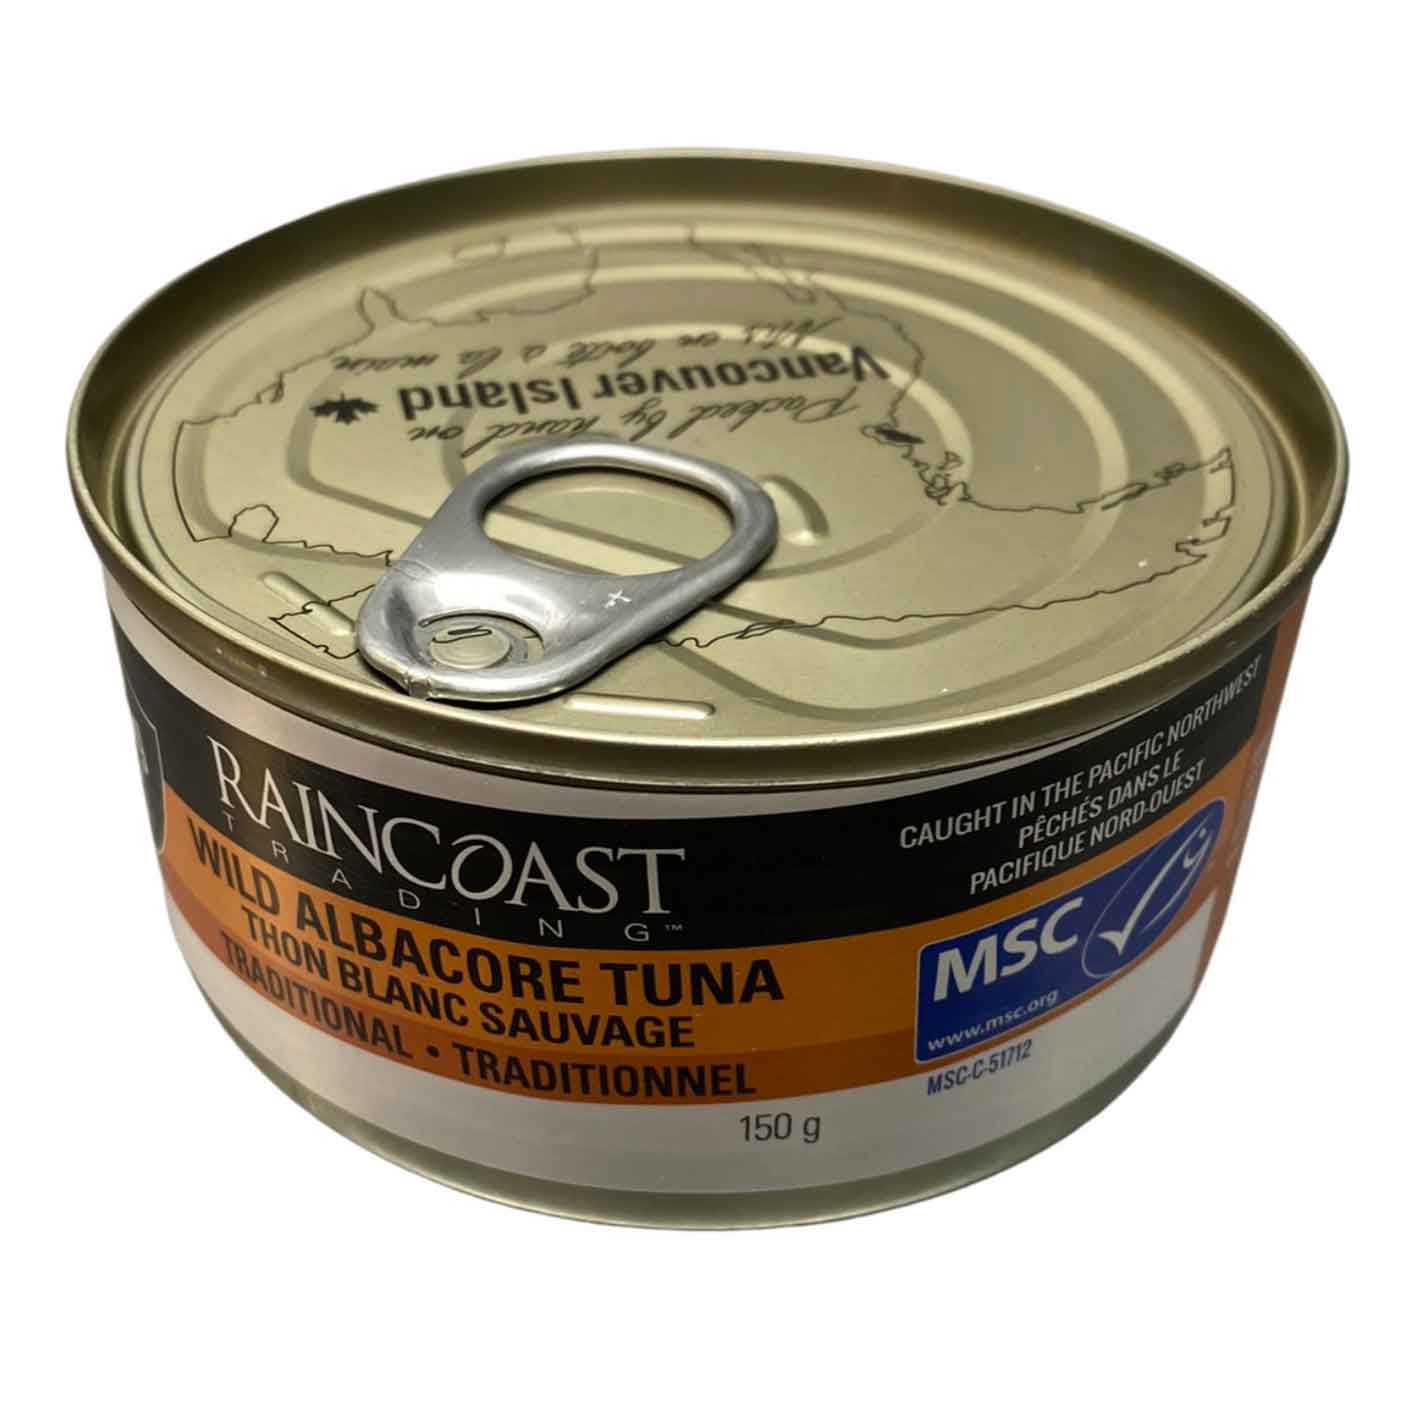 Canned Tuna Albacore Raincoast